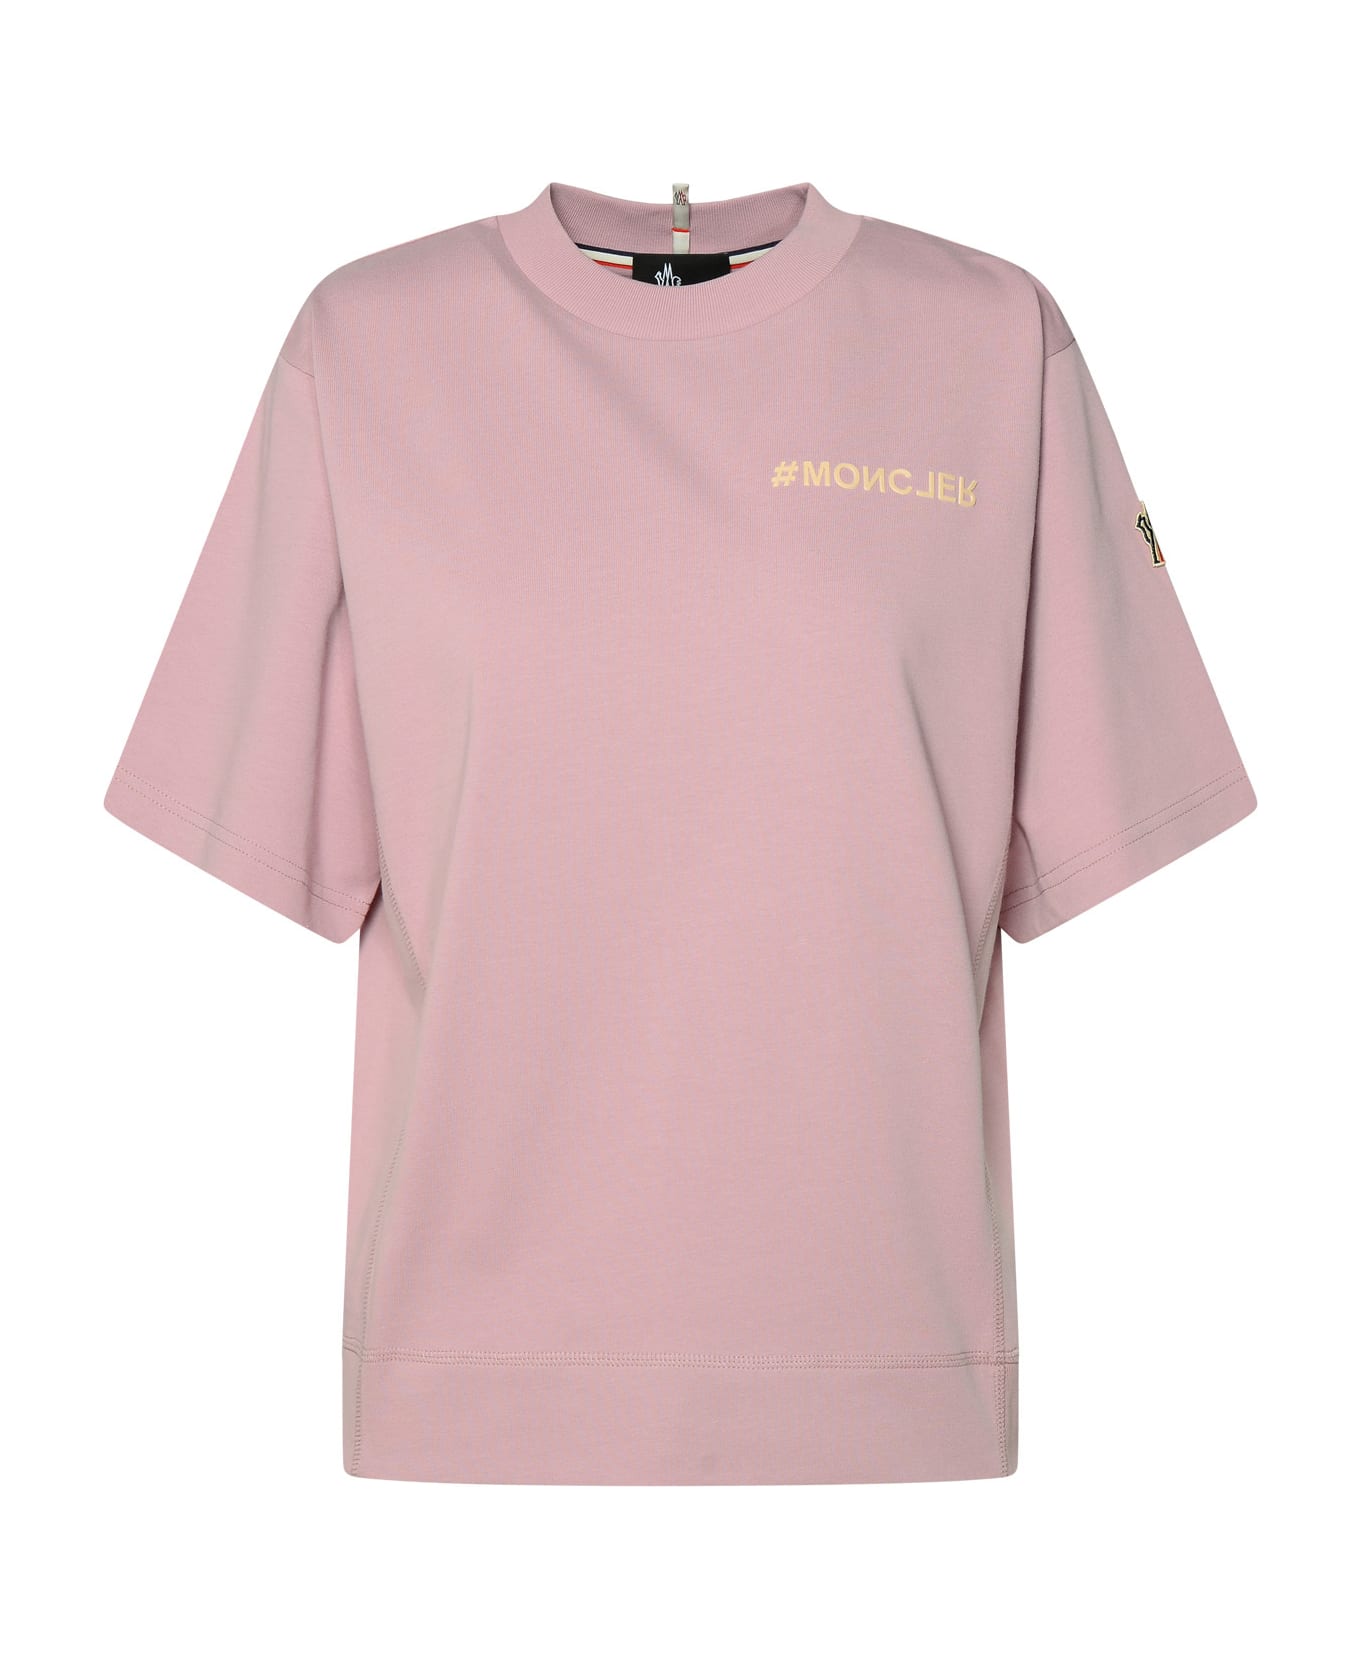 Moncler Grenoble Pink Cotton T-shirt - PINK シャツ